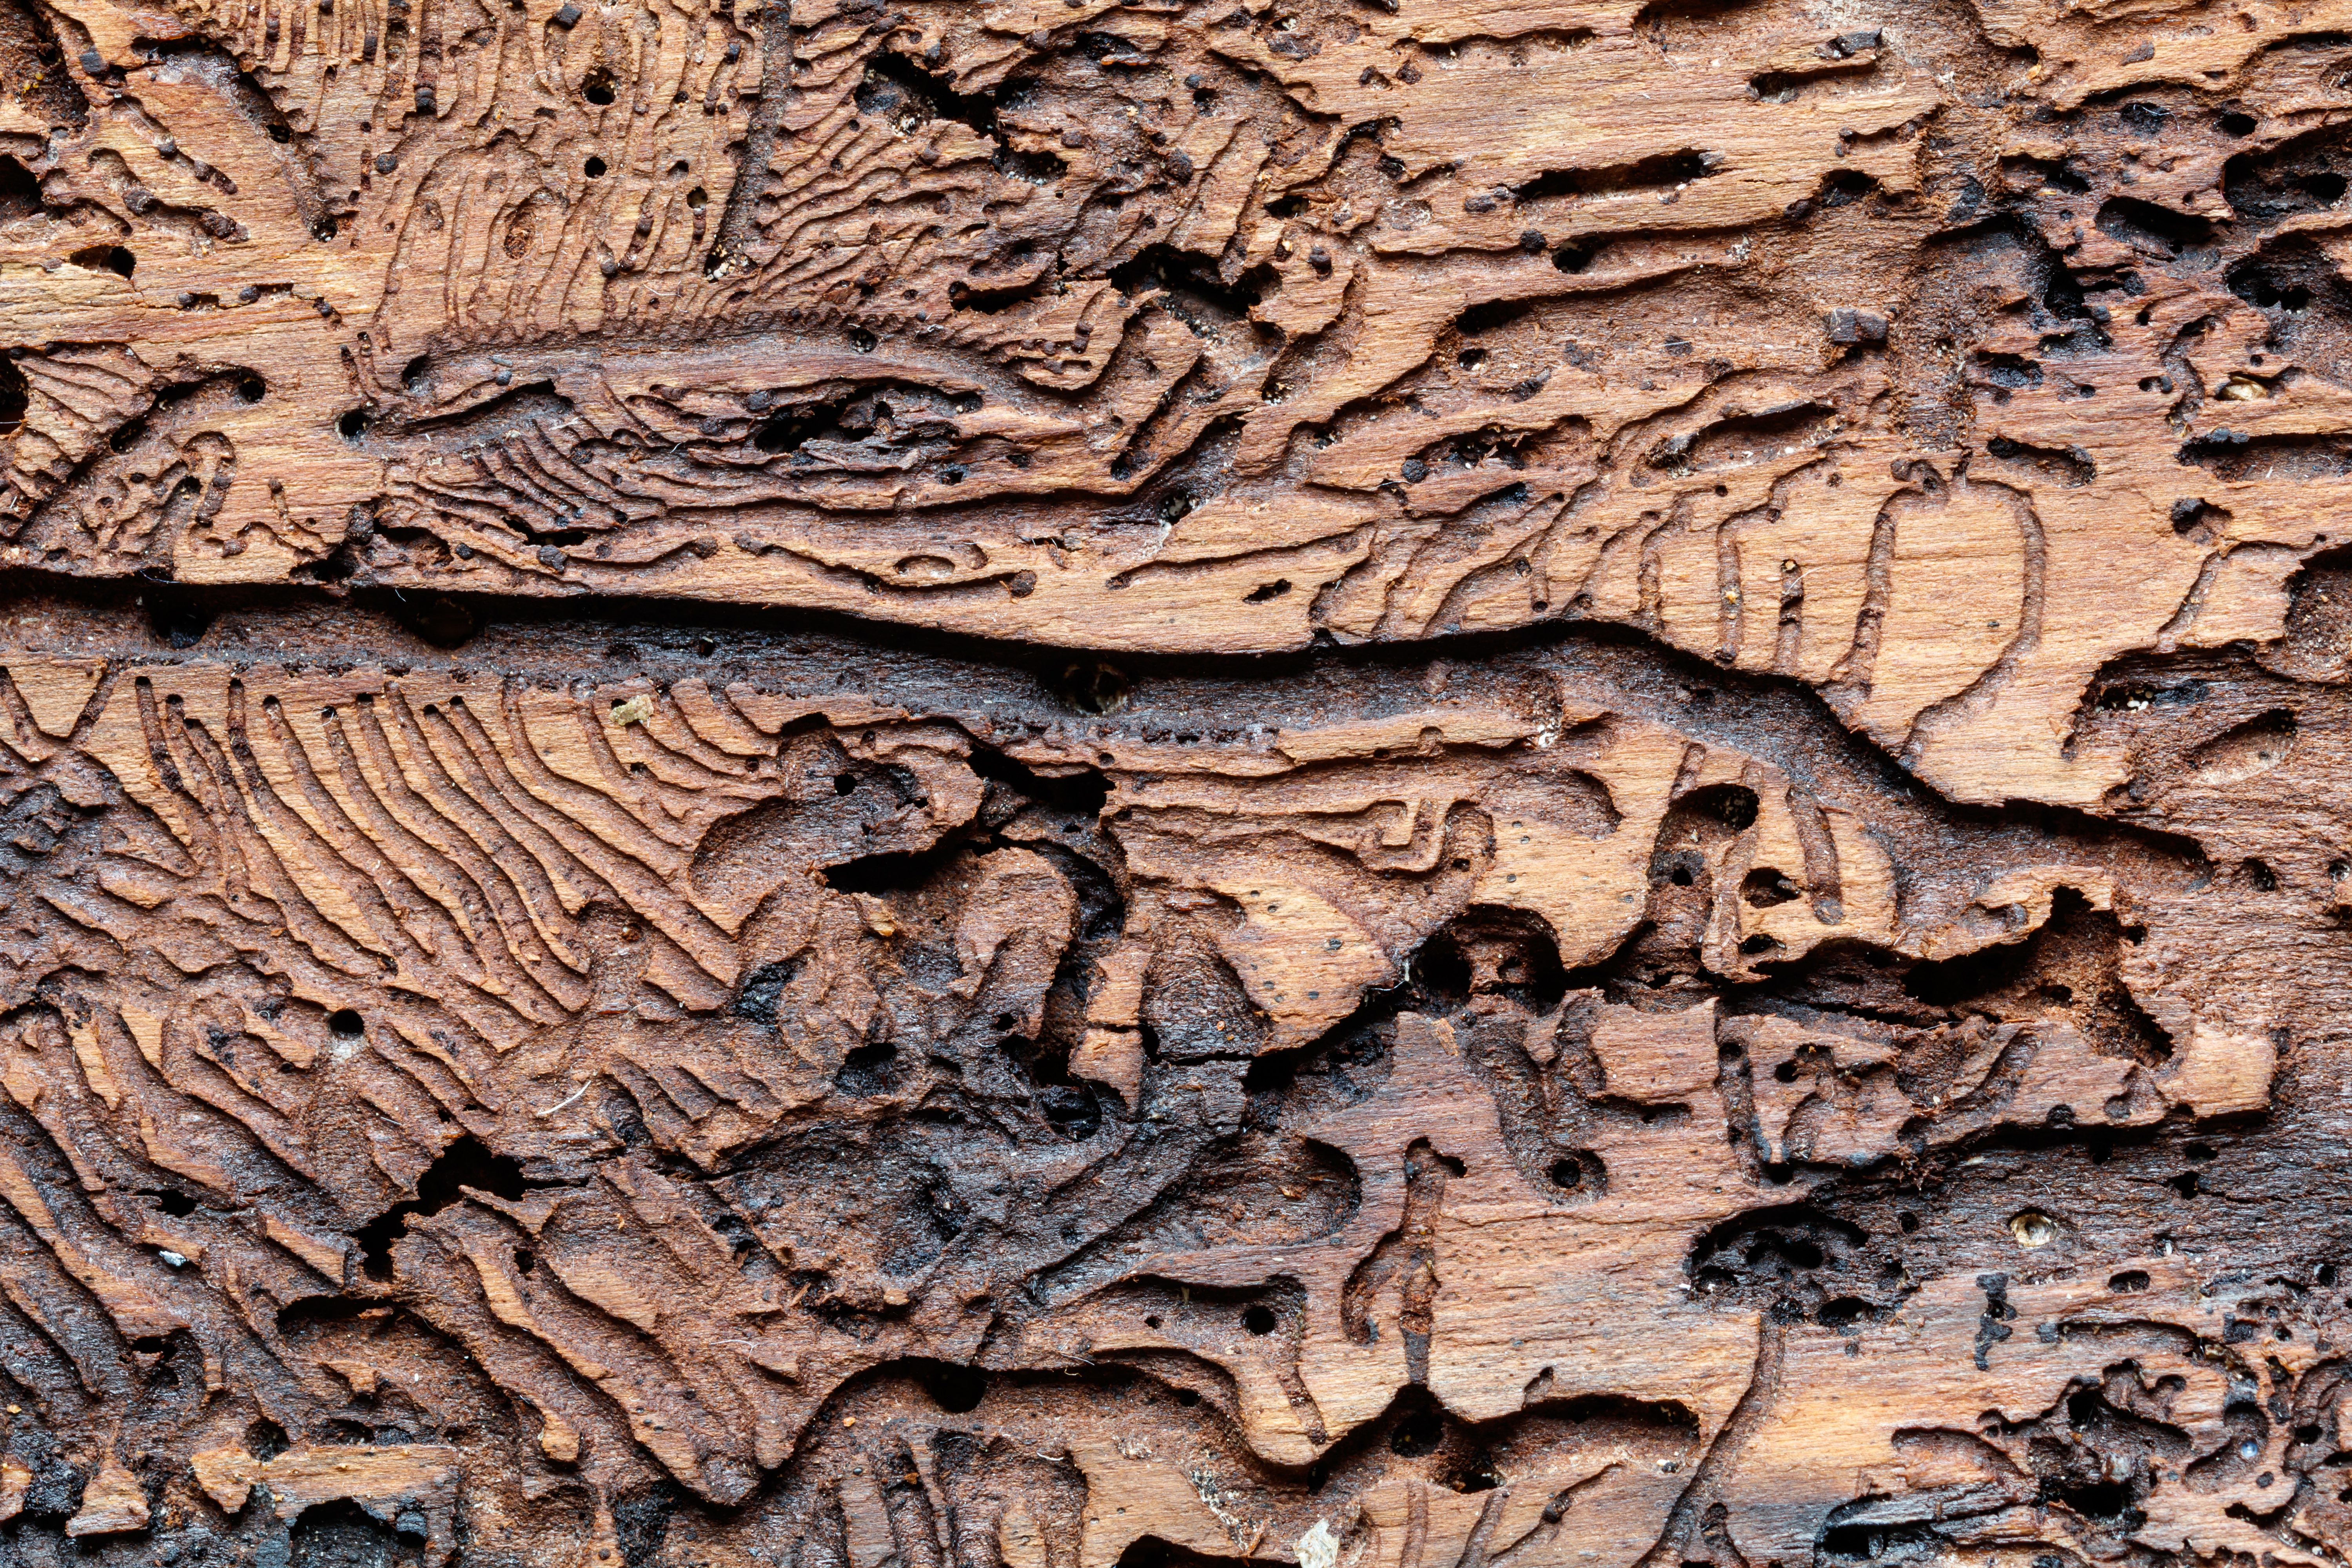 Pine bark, tree bark with bark beetle infestation